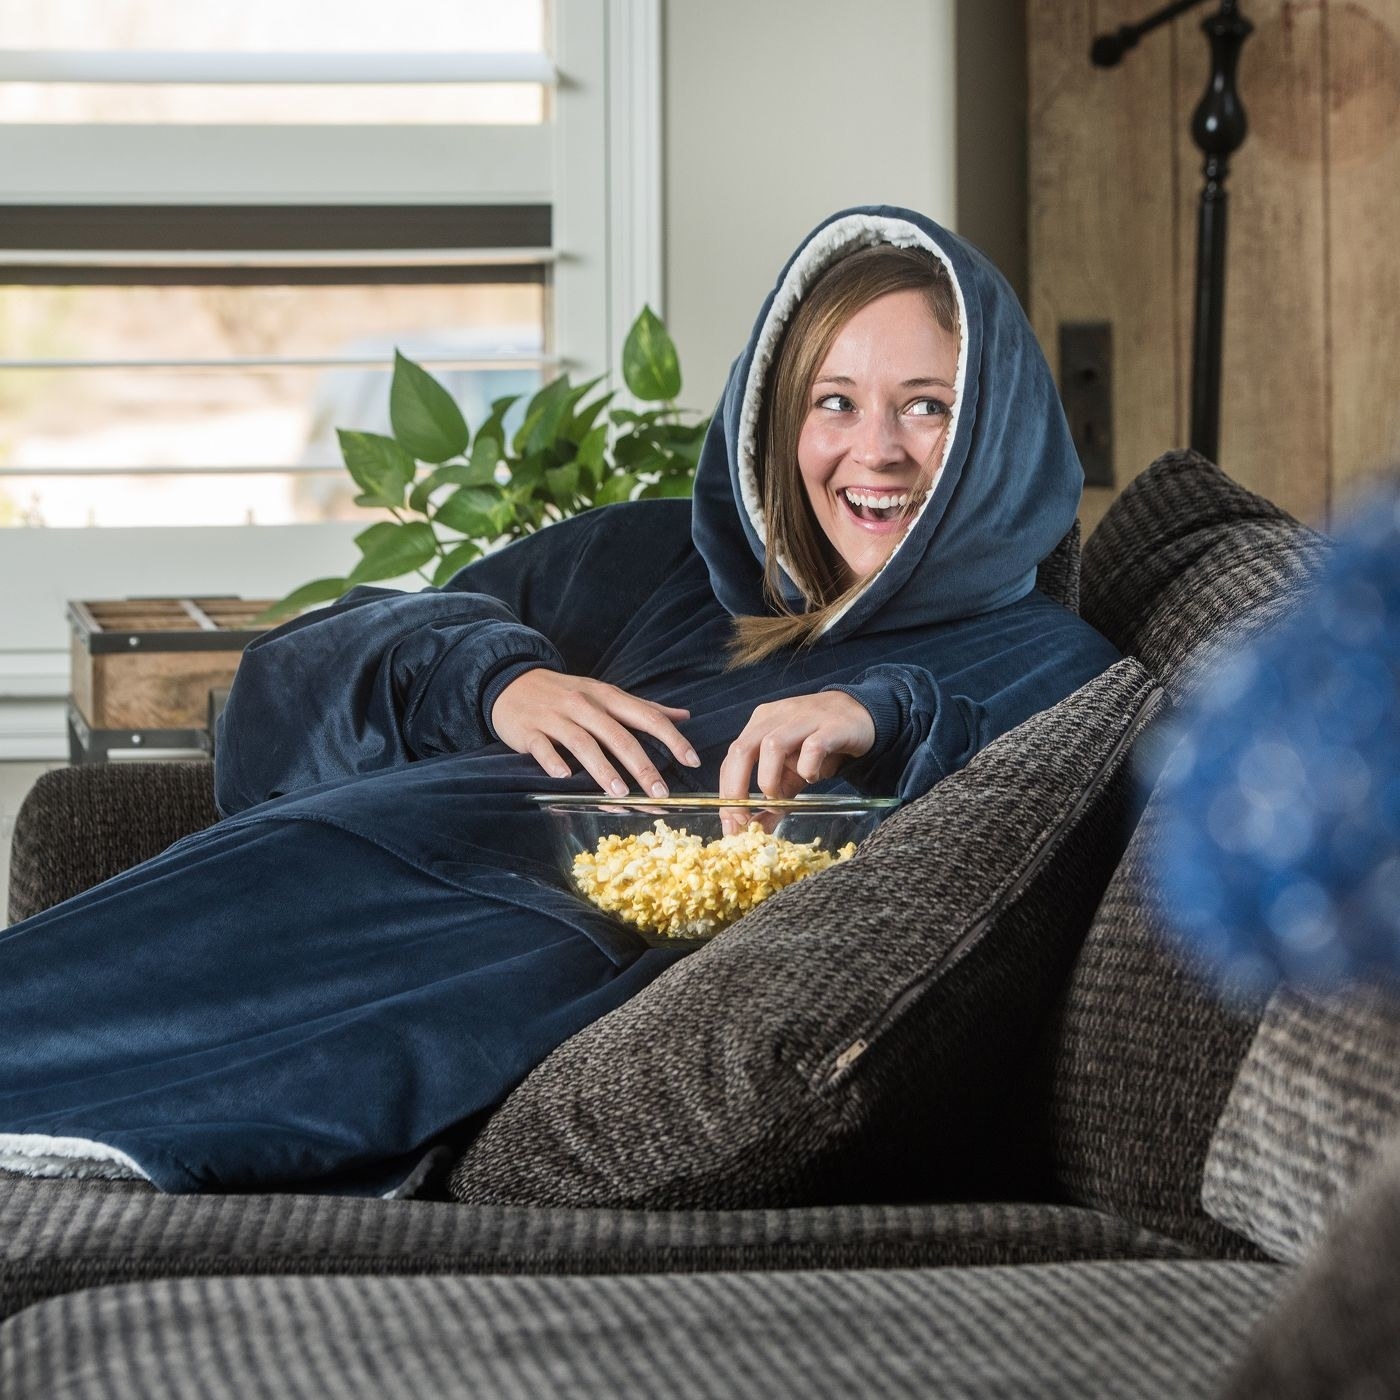 Model wearing blue blanket with popcorn